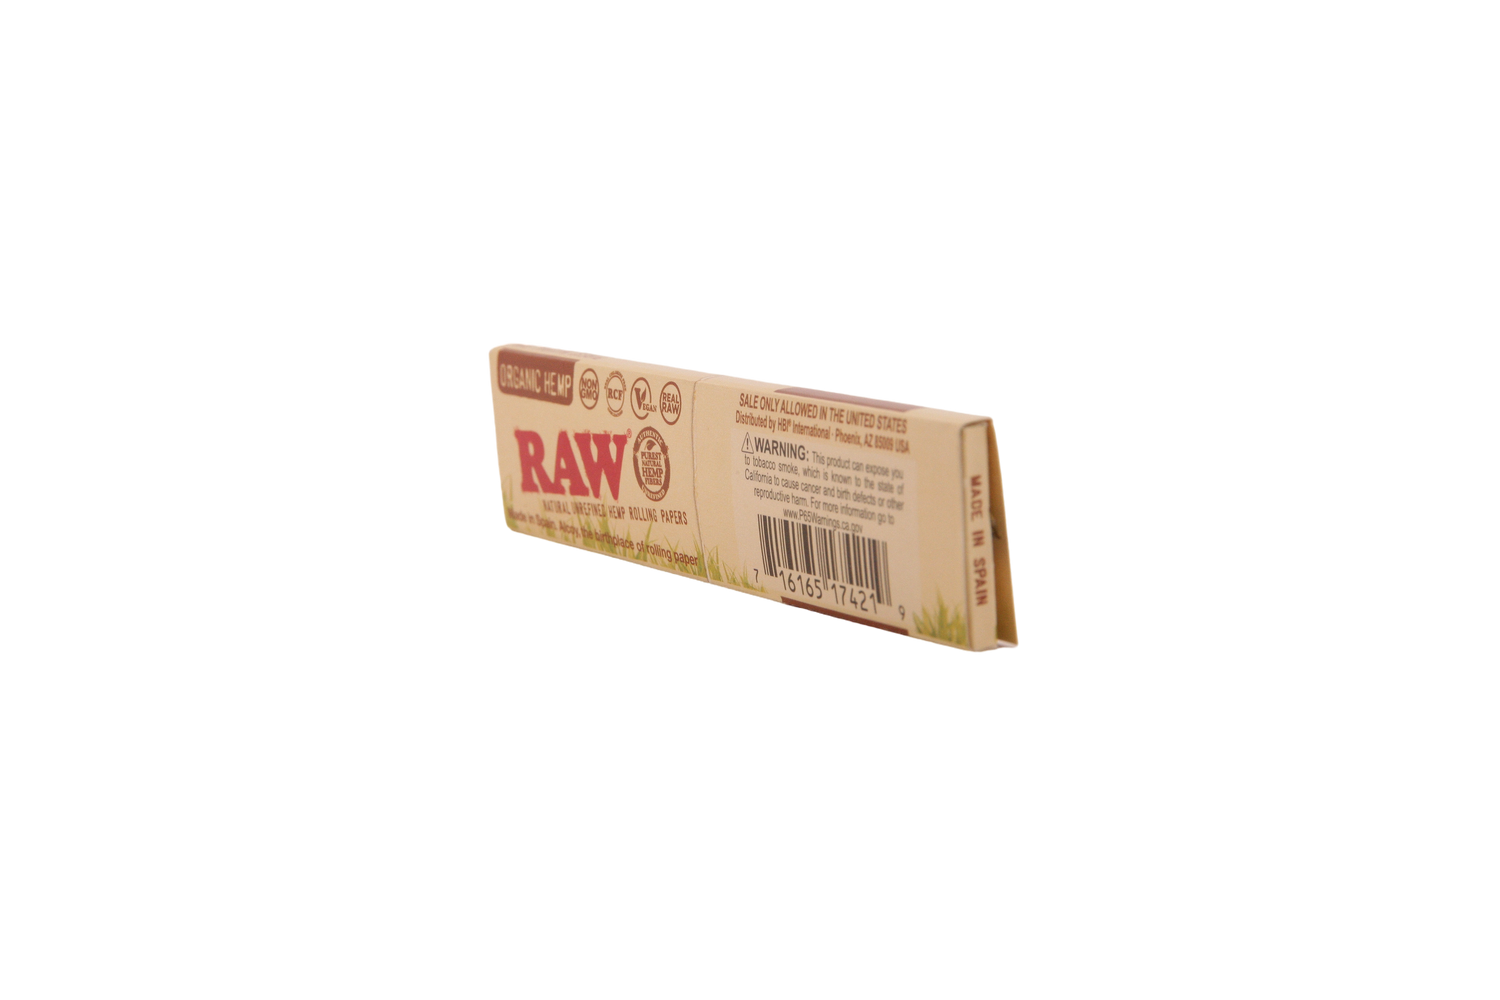 Raw Organic Hemp Papers- King Size Slim